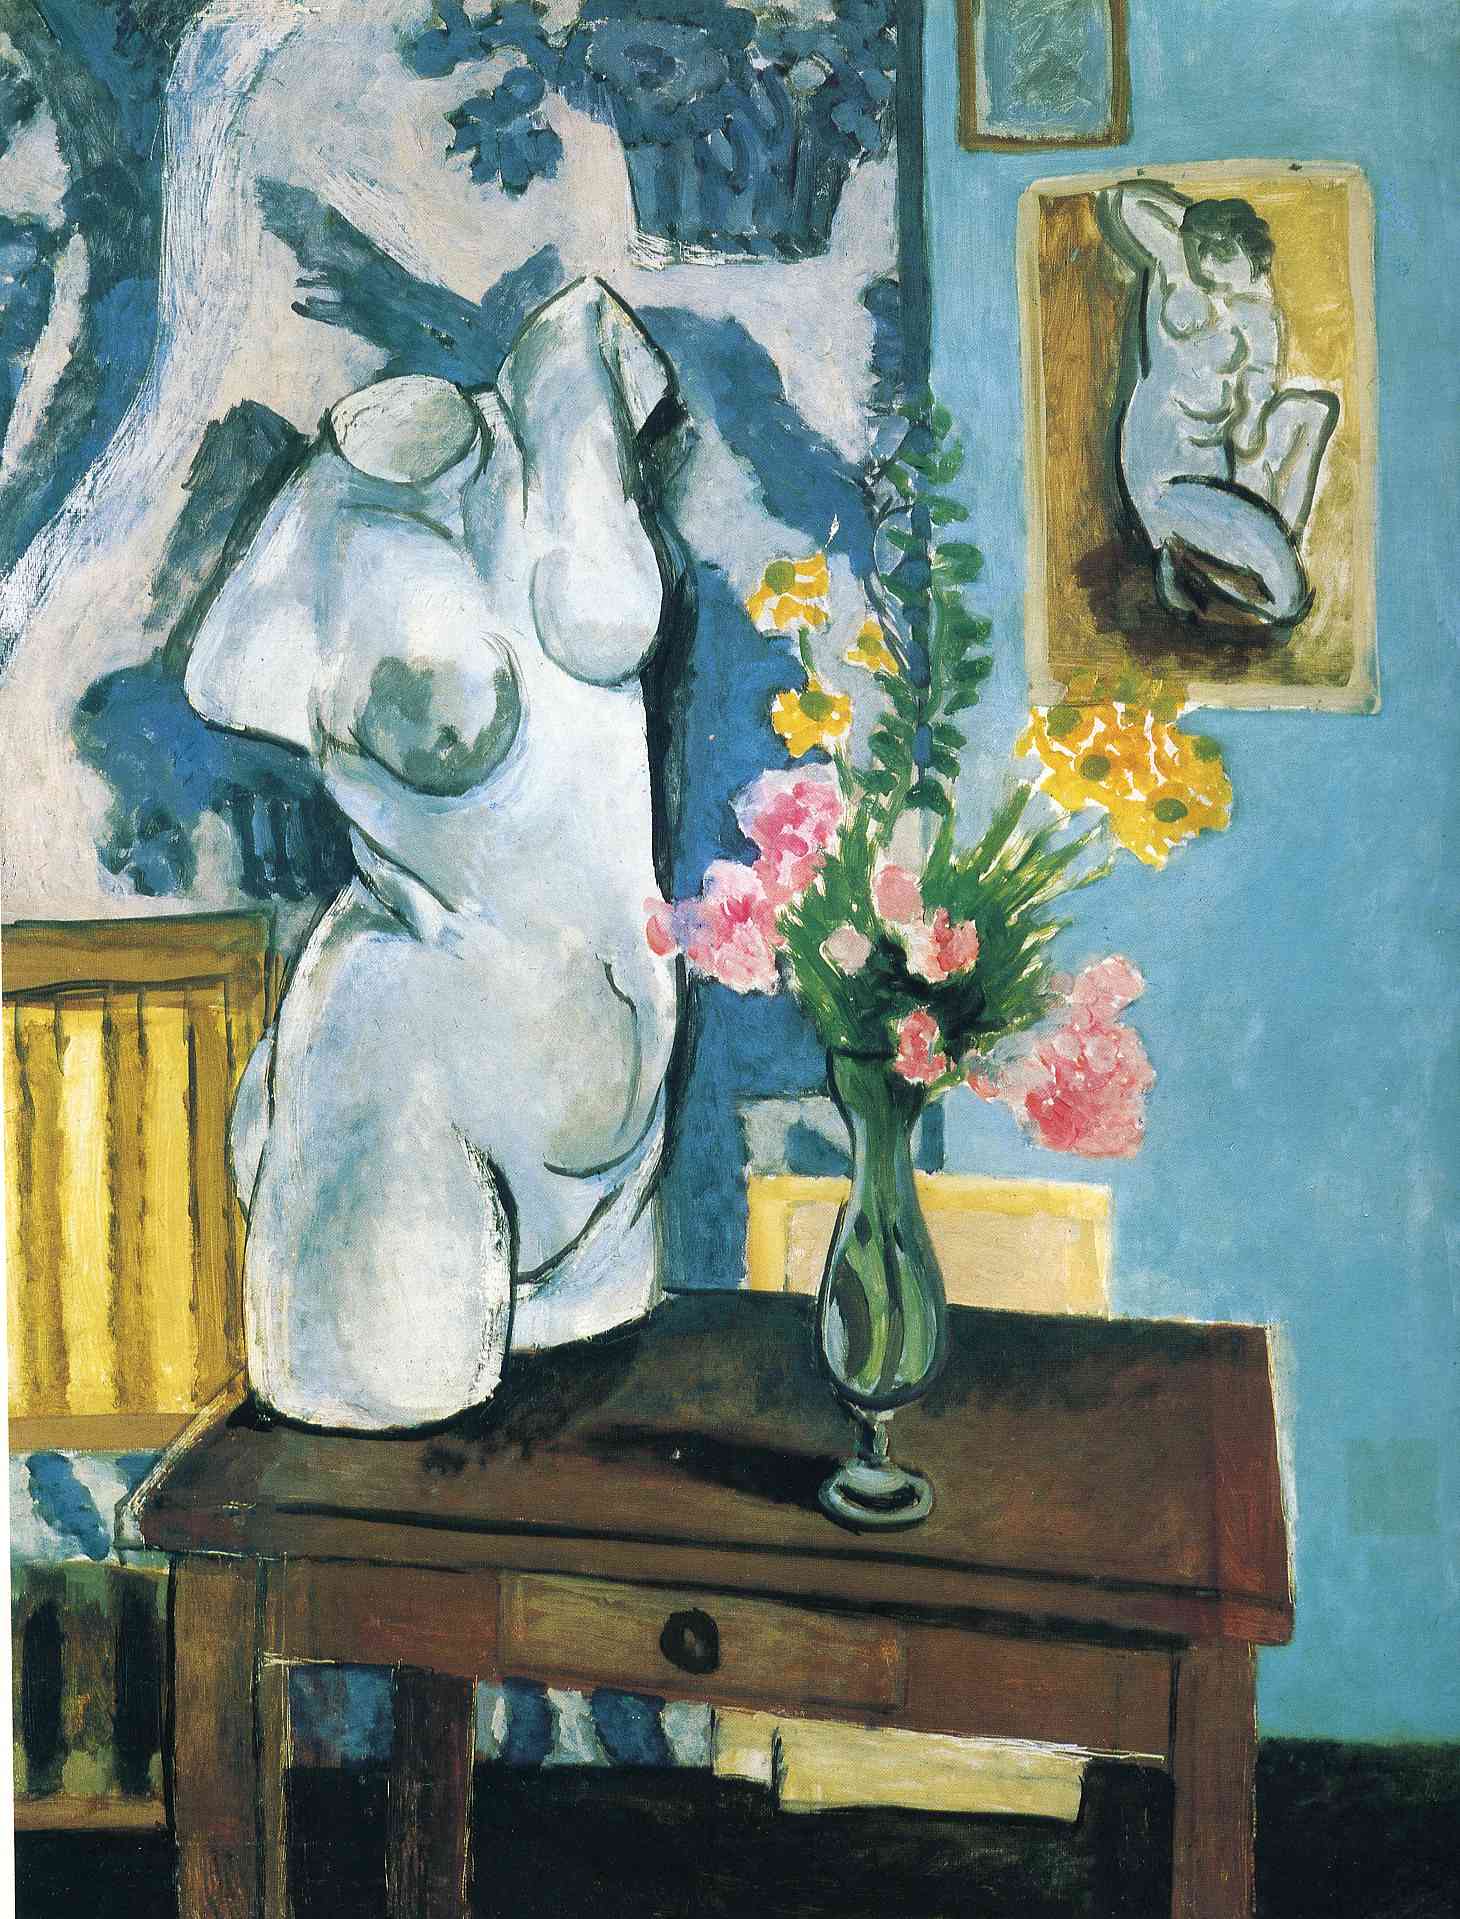 Henri Matisse - The Plaster Torso 1919